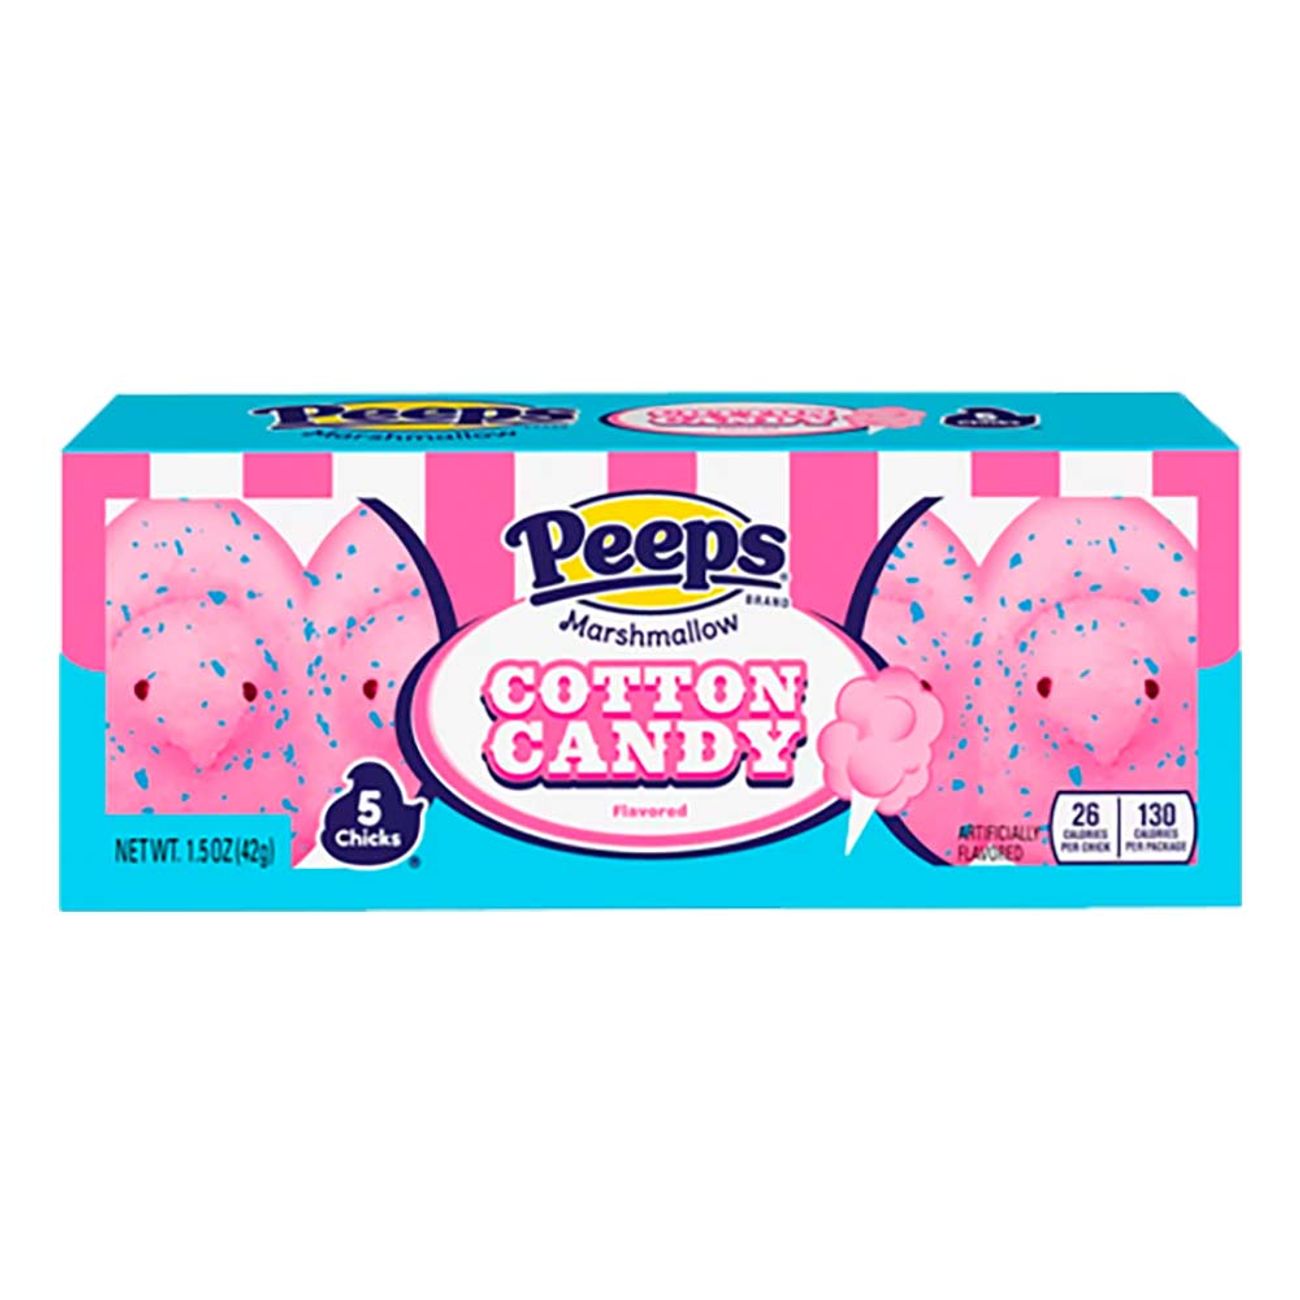 peeps-cotton-candy-marshmallow-chicks-93564-1